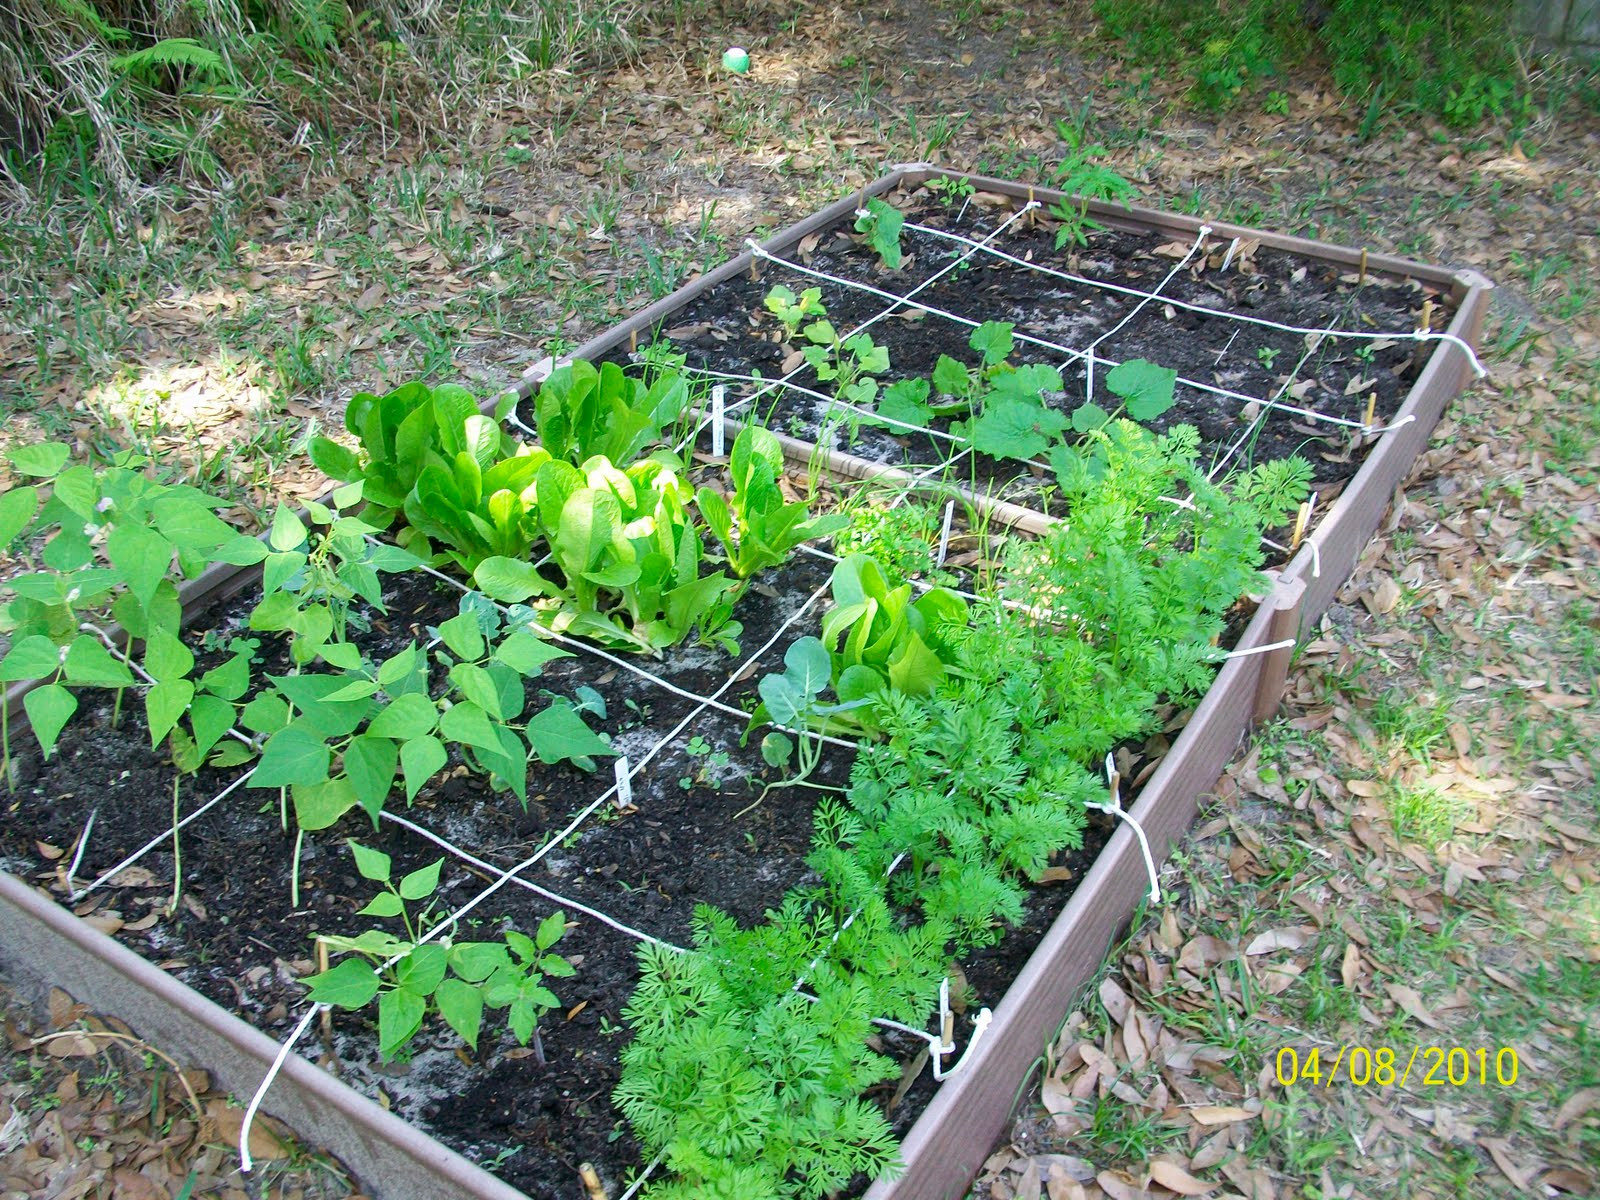 Best ideas about Backyard Vegetable Garden
. Save or Pin Deeny s Simple Joys My Backyard Ve able Garden Endeavor Now.